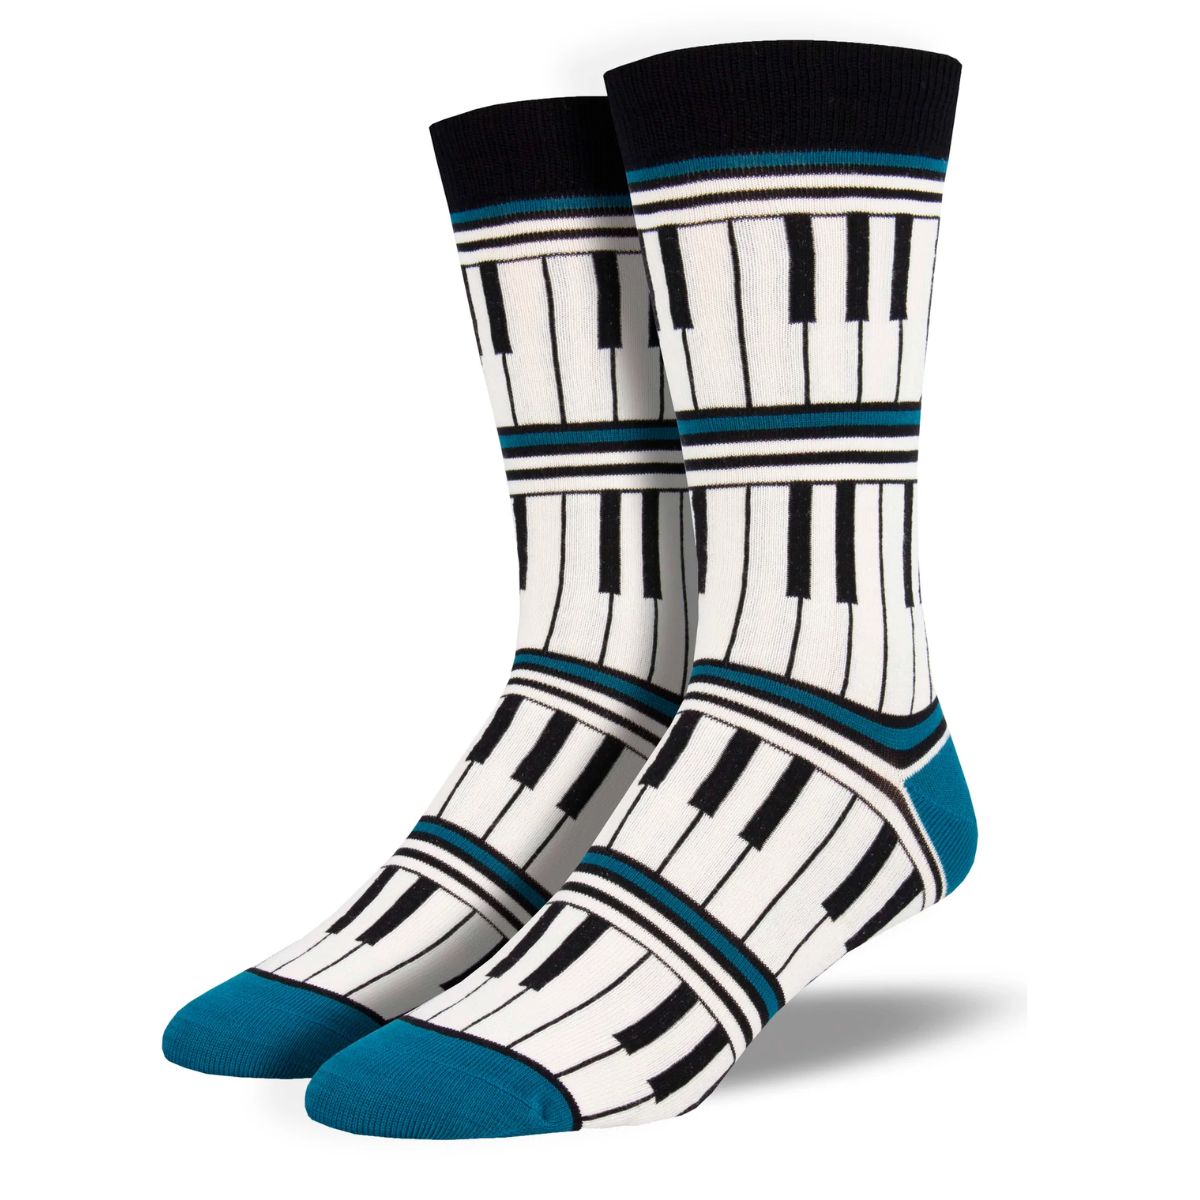 Piano socks a pair of blue crew socks with piano keys print